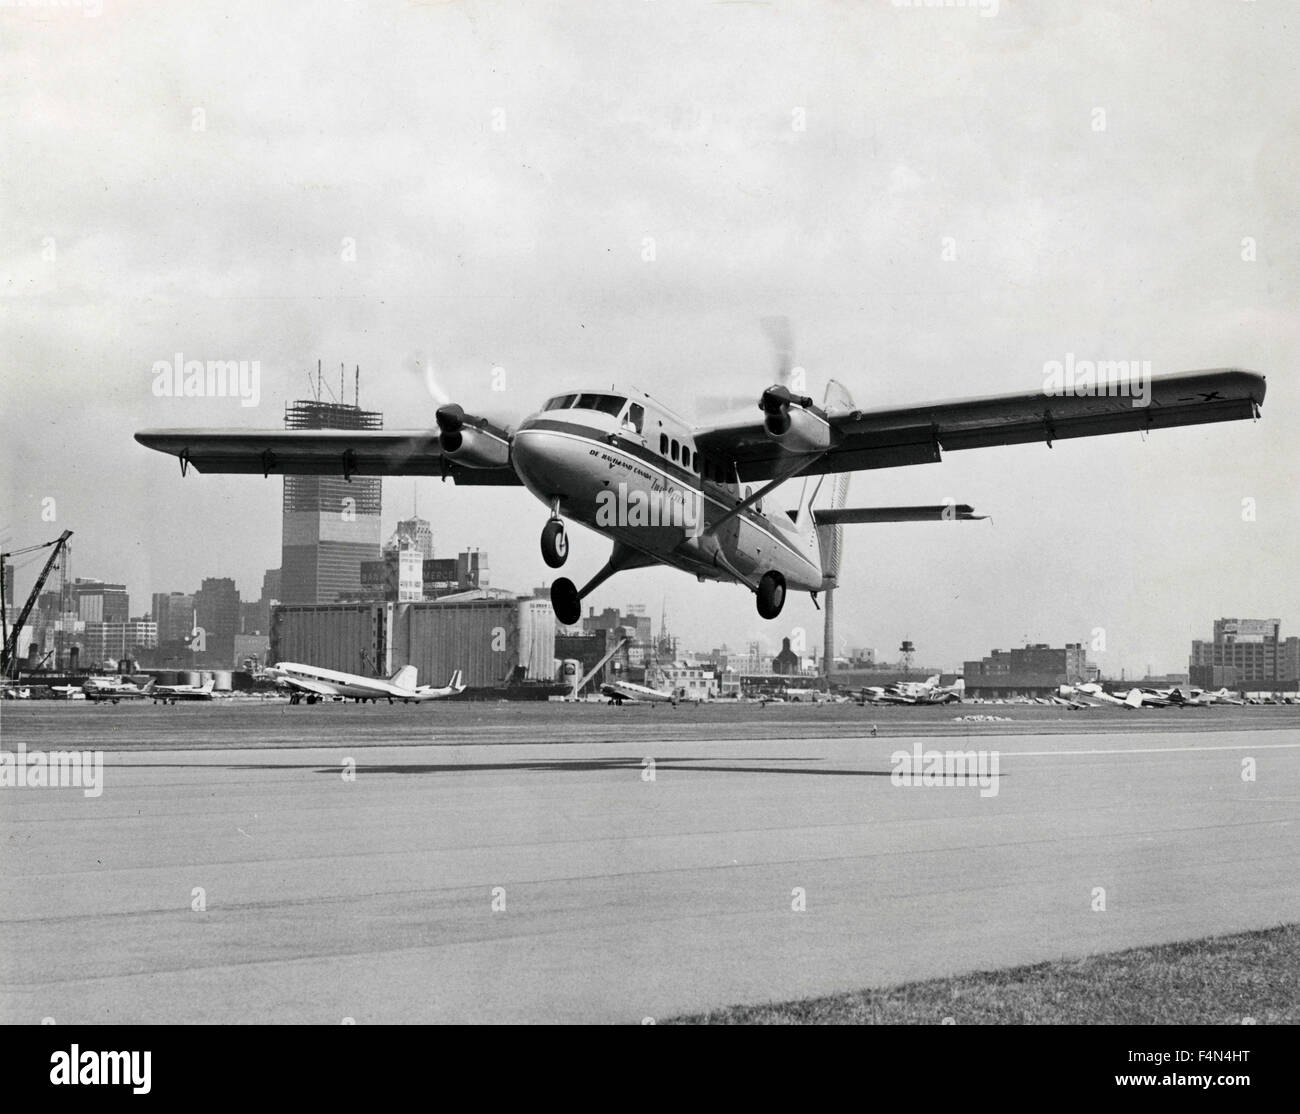 Air DE Havilland DHC-6 Twin Otter taking off, USA Stock Photo